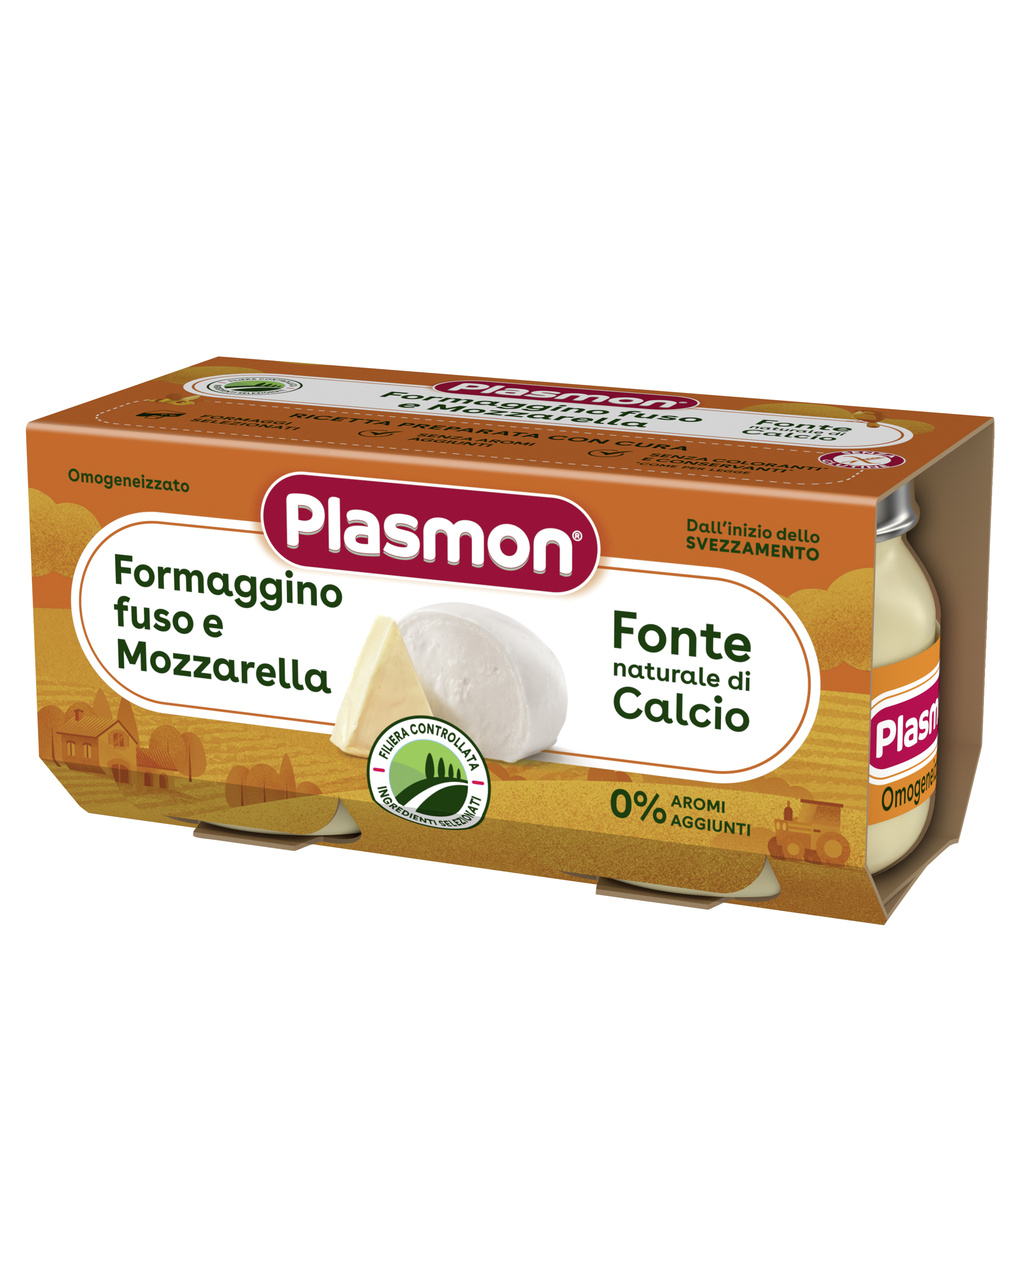 Plasmon – omogeneizzato formaggino fuso e mozzarella 2x80g - Plasmon